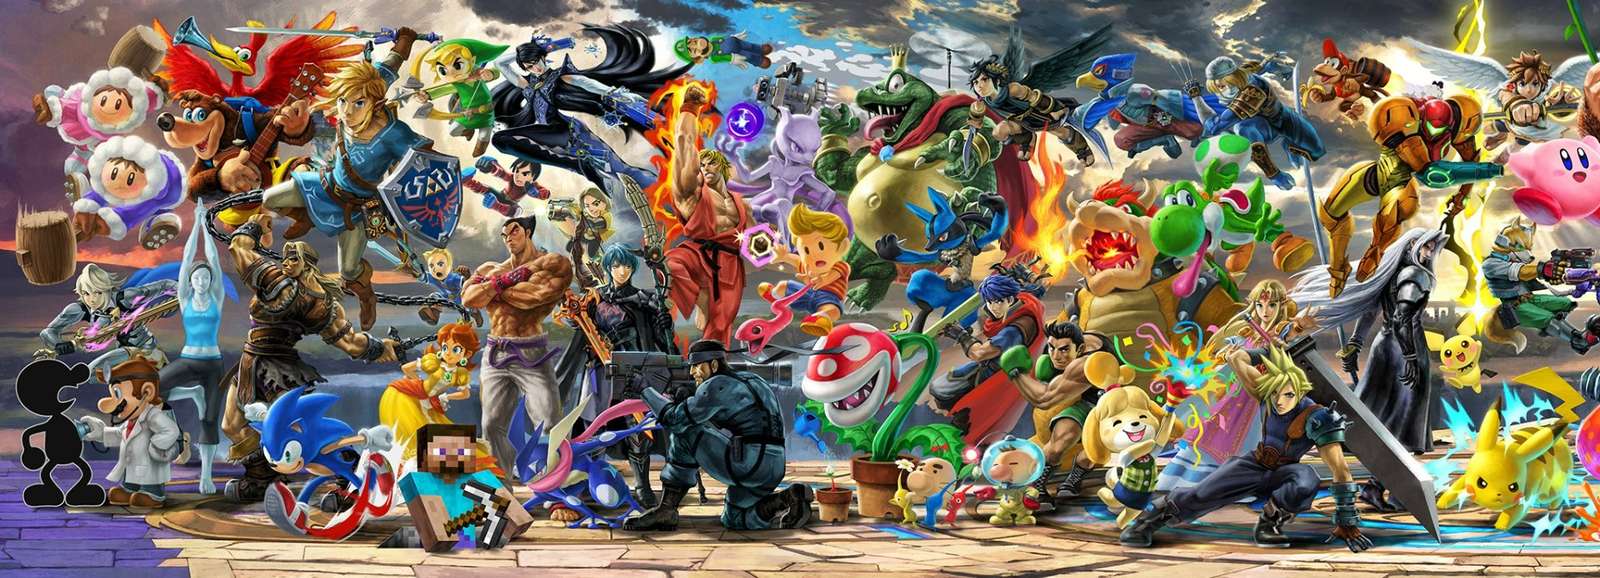 Super Smash Bros Ultimate-muurschildering, linkerhelft legpuzzel online